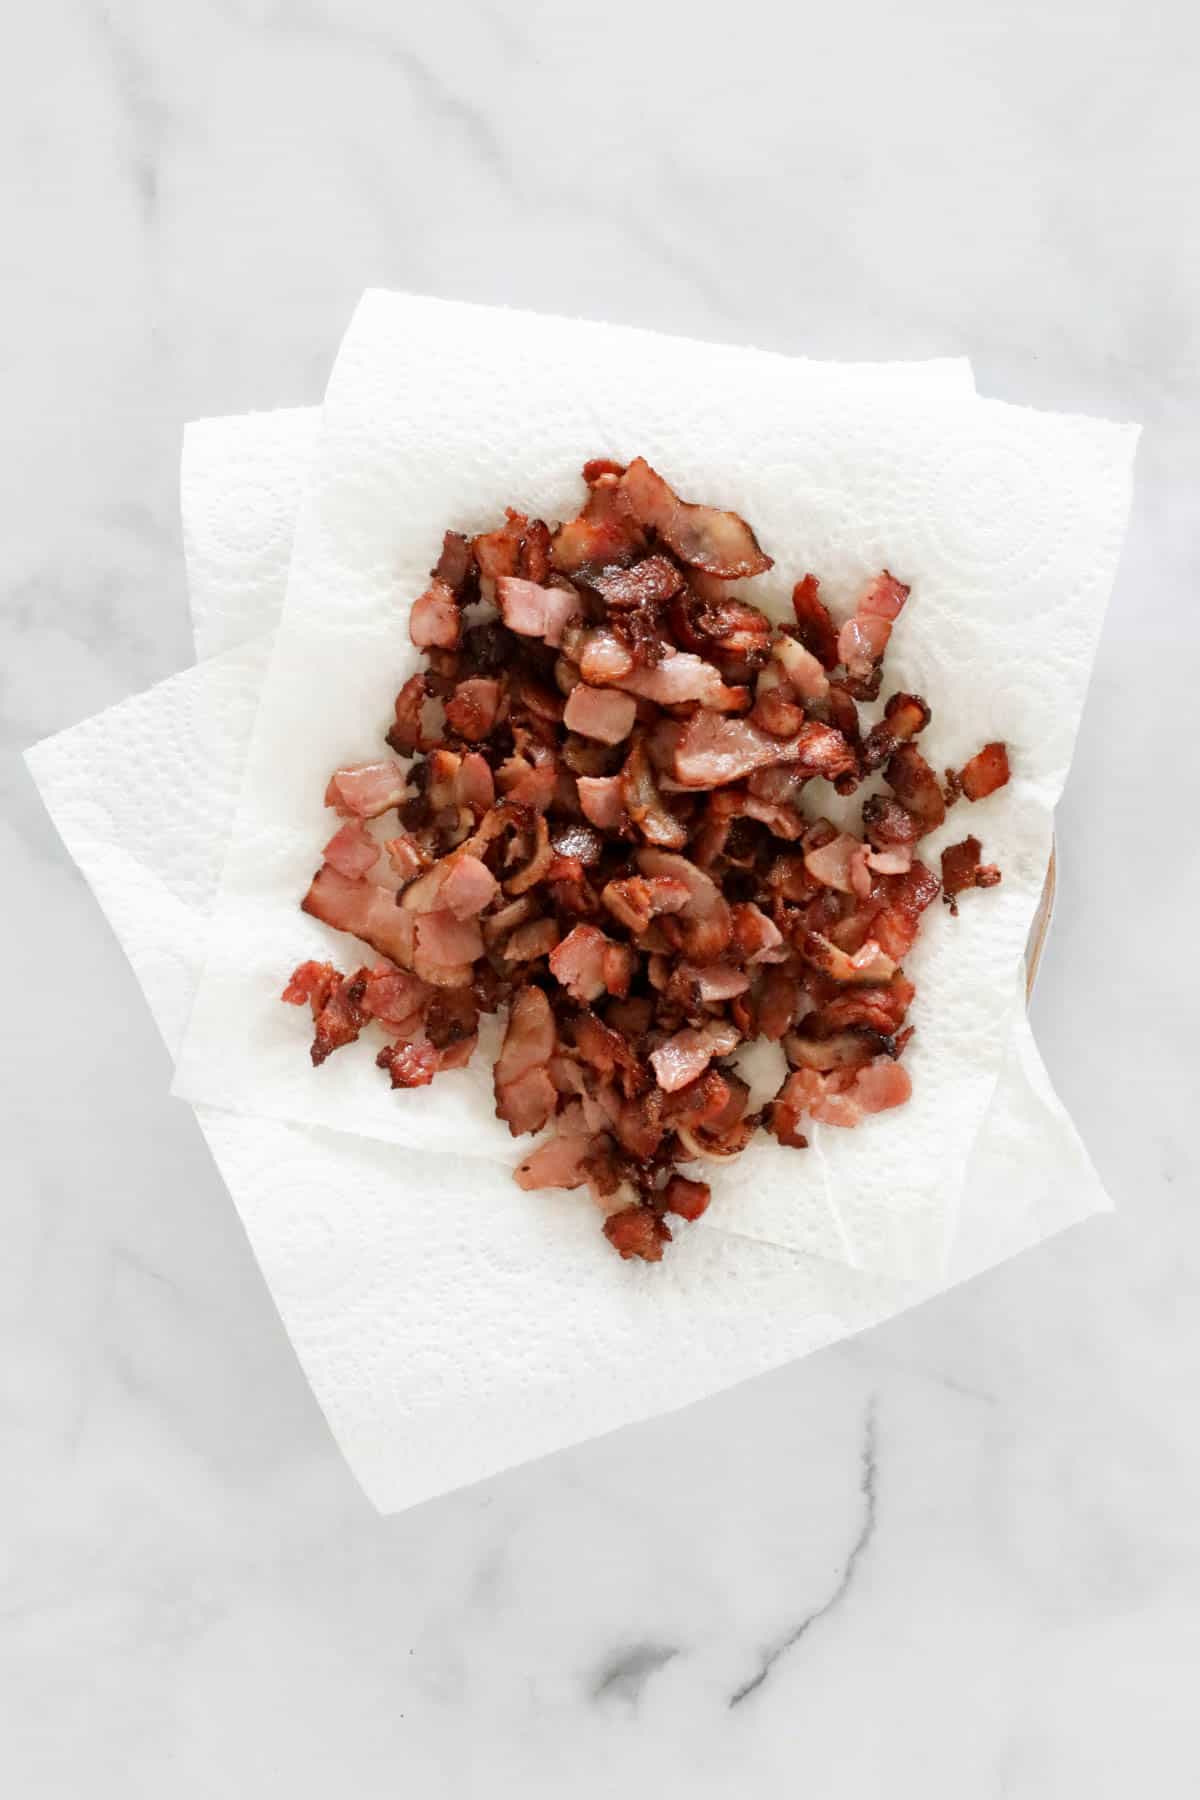 Crispy bacon pieces on kitchen paper towel.